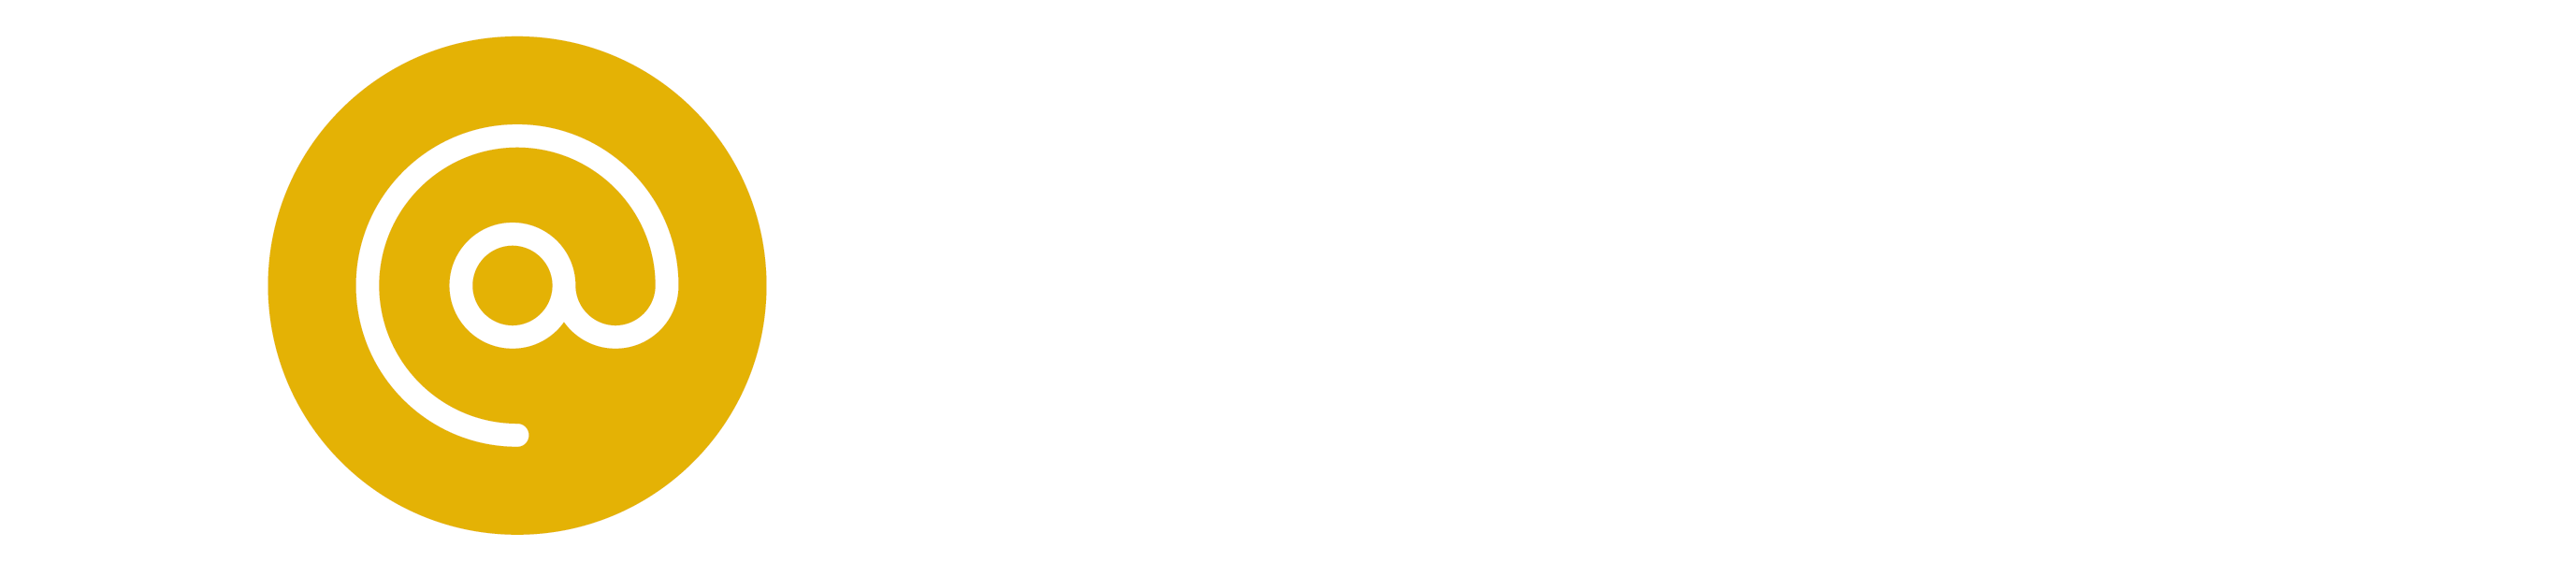 Logotipo Justiça.gov.pt